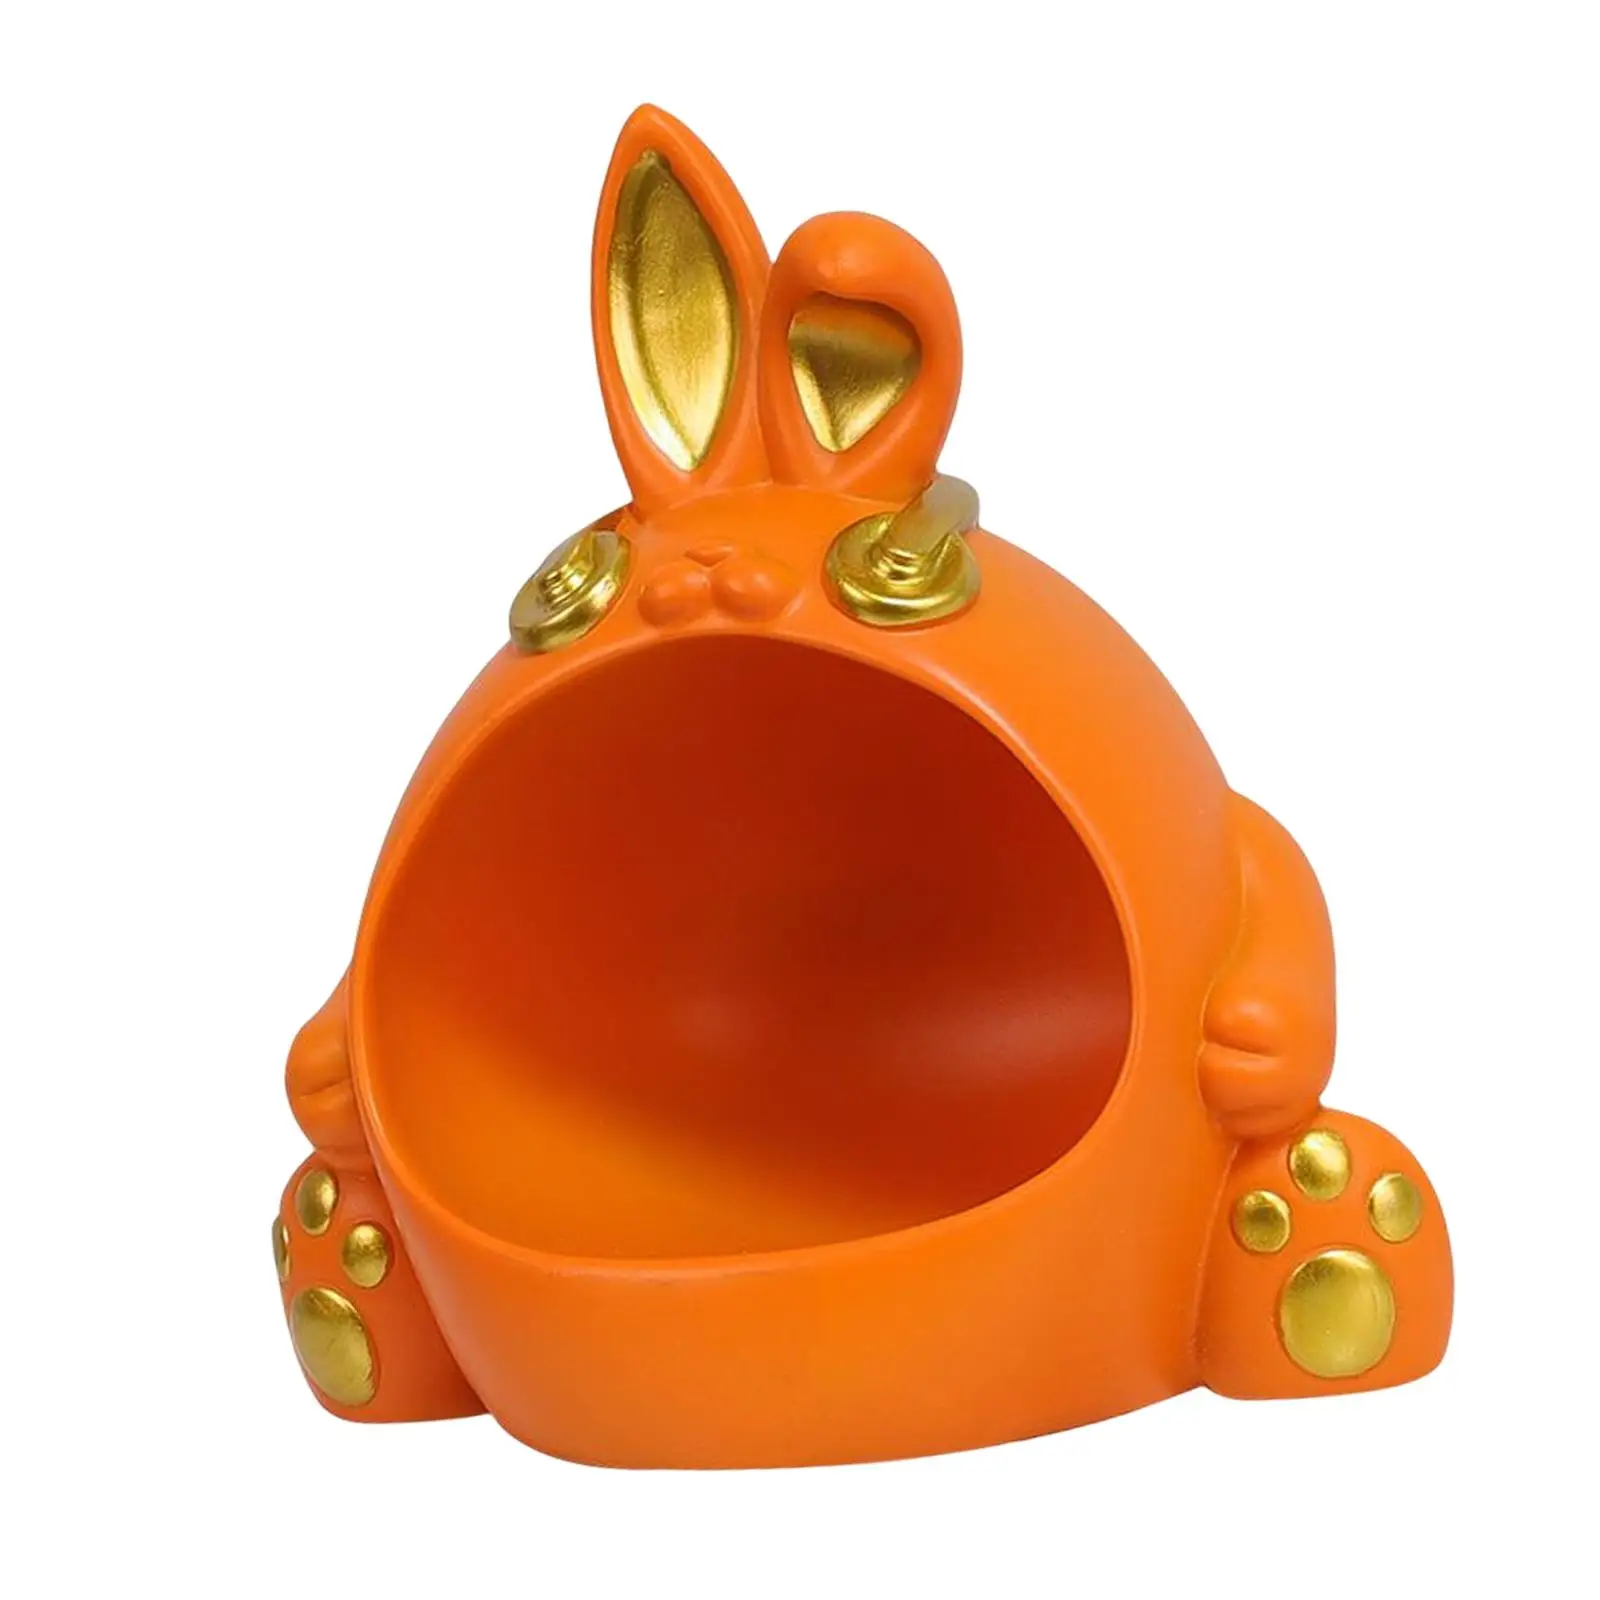 Resin Storage Box Rabbit Figurine Cute Animal for Home Decoration Ornament